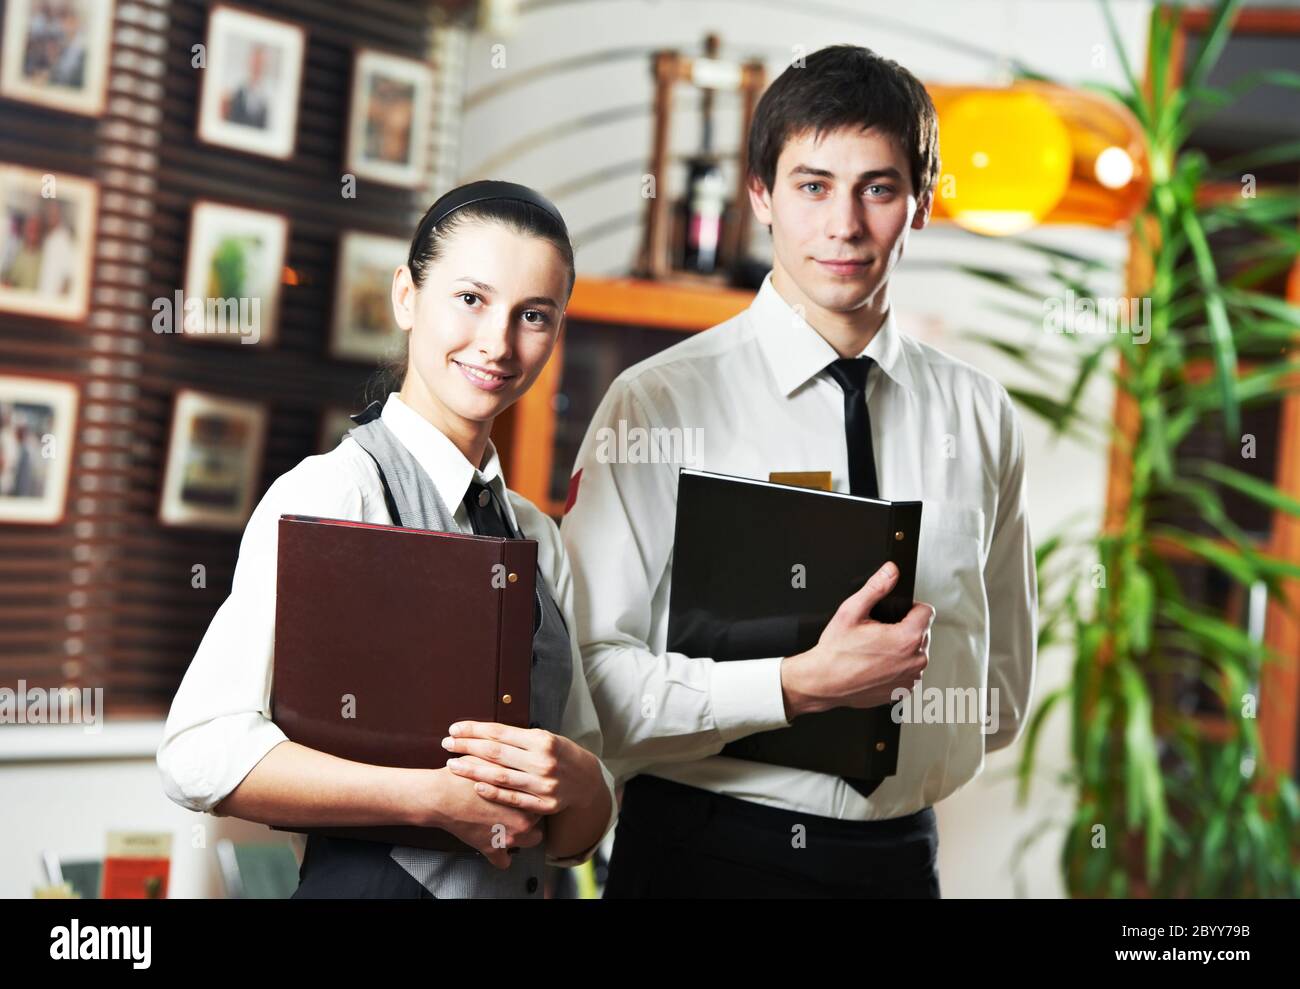 Waitress girl and waiter man in restaurant Stock Photo